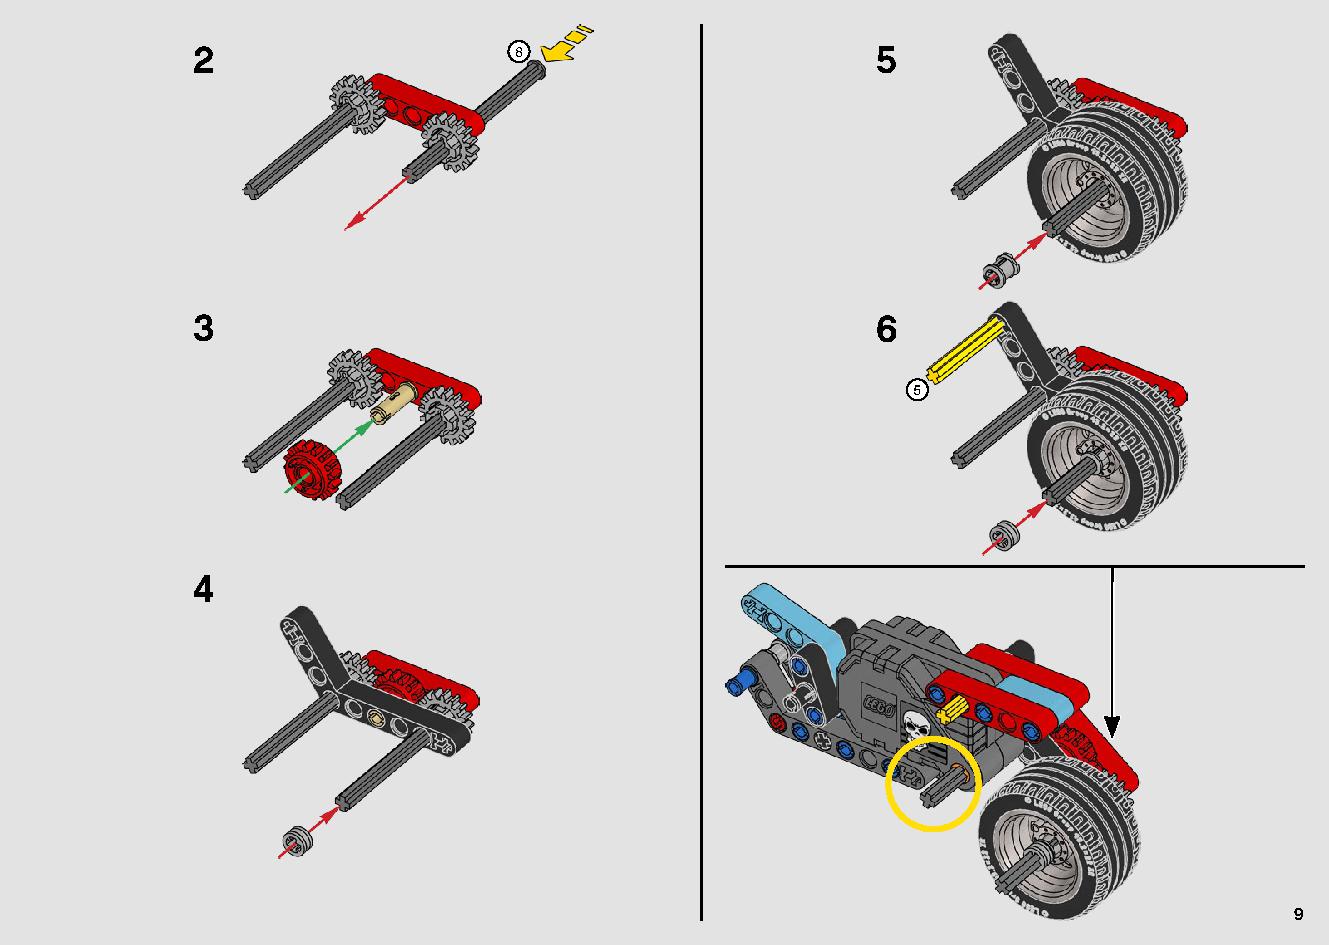 Stunt Show Truck & Bike 42106 LEGO information LEGO instructions 9 page